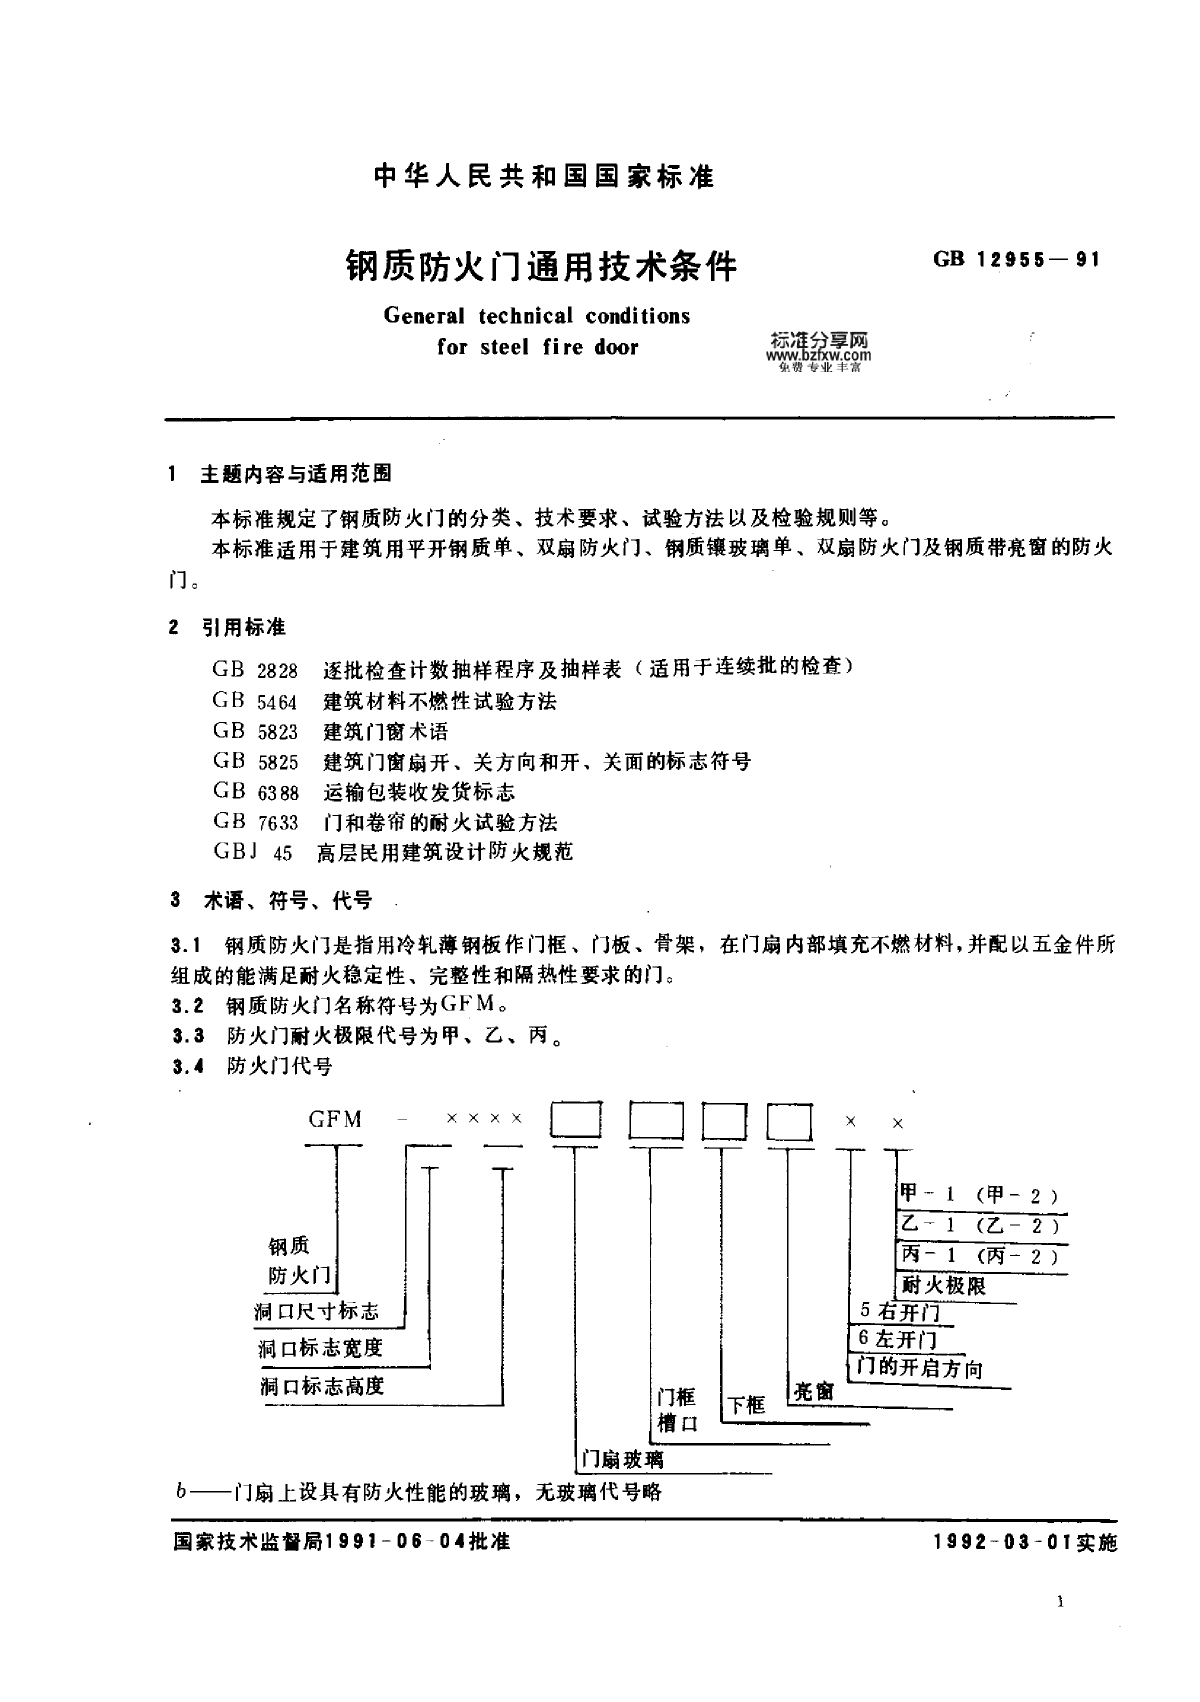 GB 12955-1991 钢质防火门通用技术条件-图一